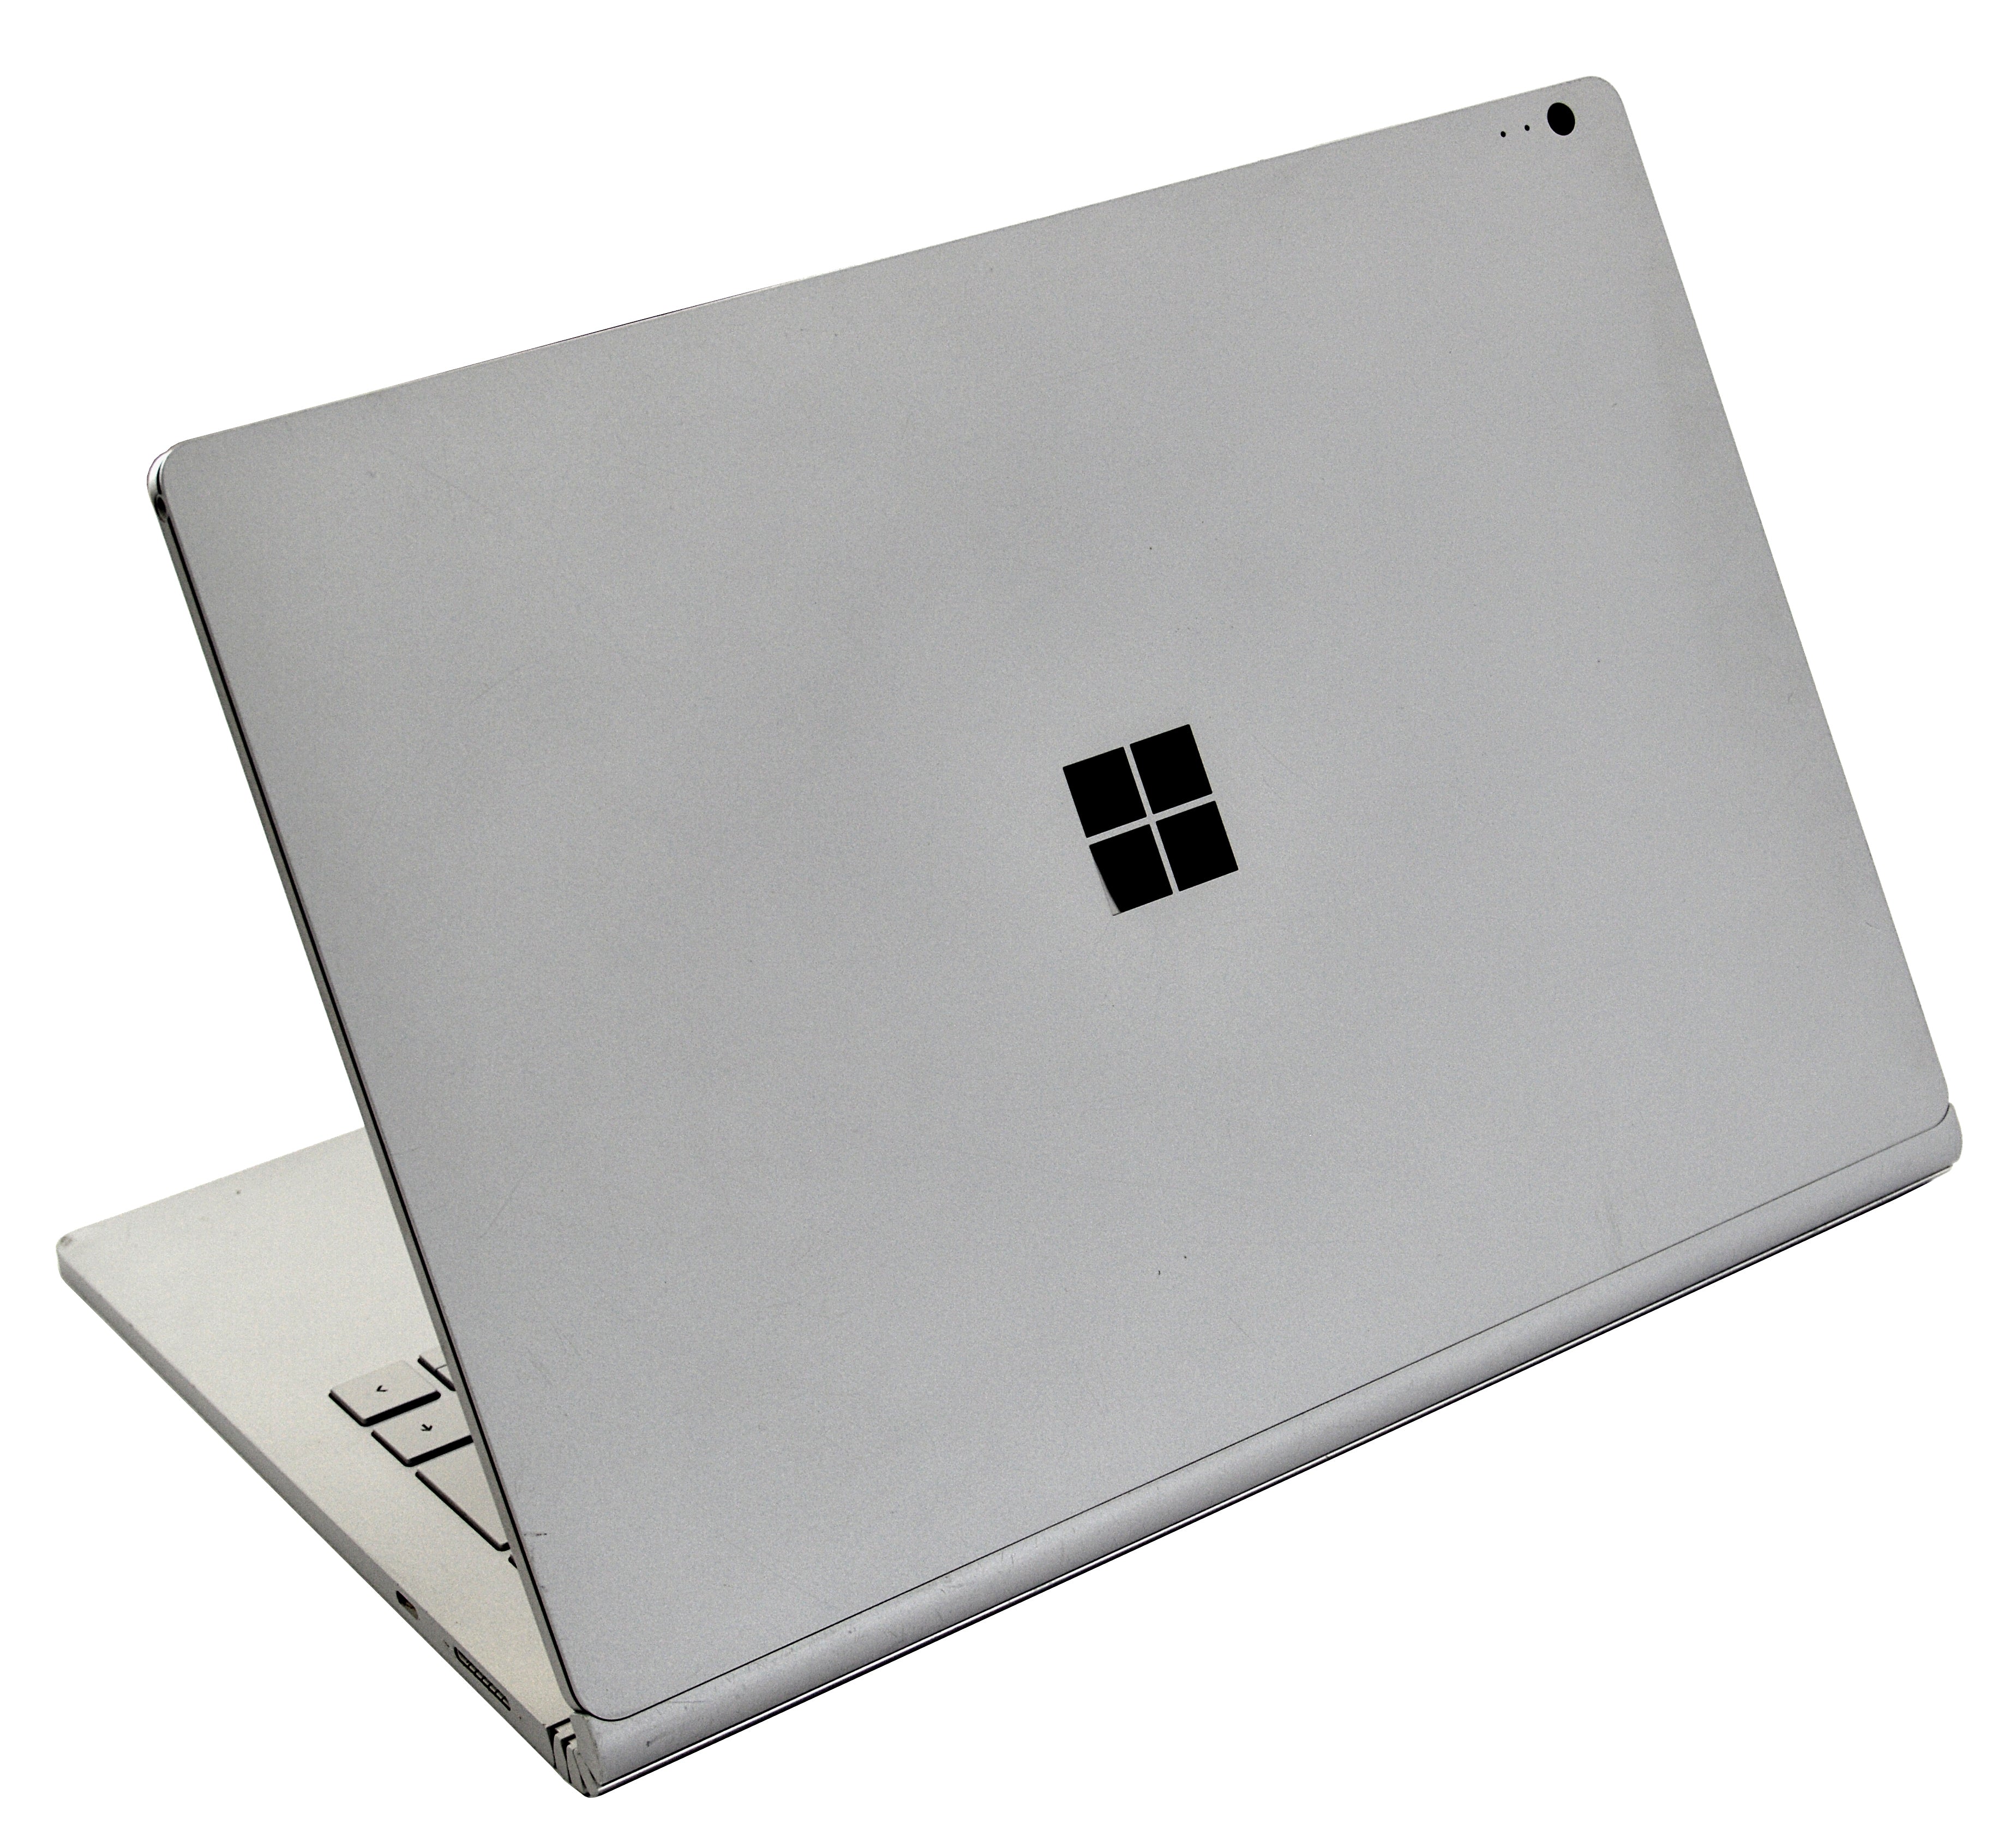 Microsoft Surface Book, 13"  Intel Core i7, 8GB RAM, 256GB SSD, Windows 10